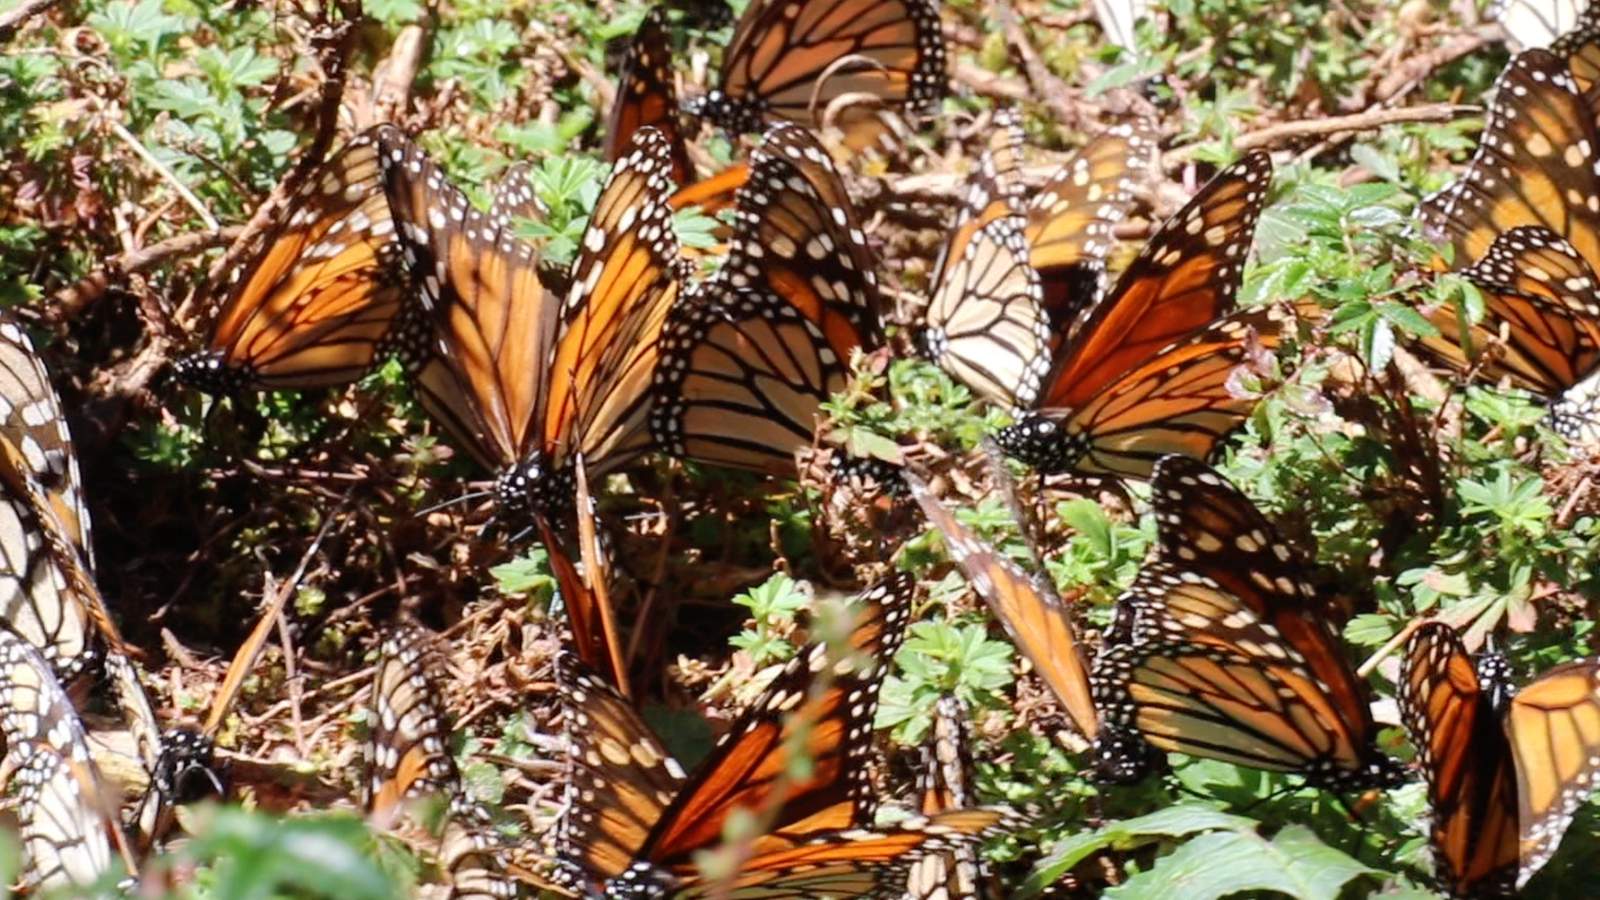 Monarch butterfly migration is unique and amazing phenomenon with Dia de Muertos symbolism